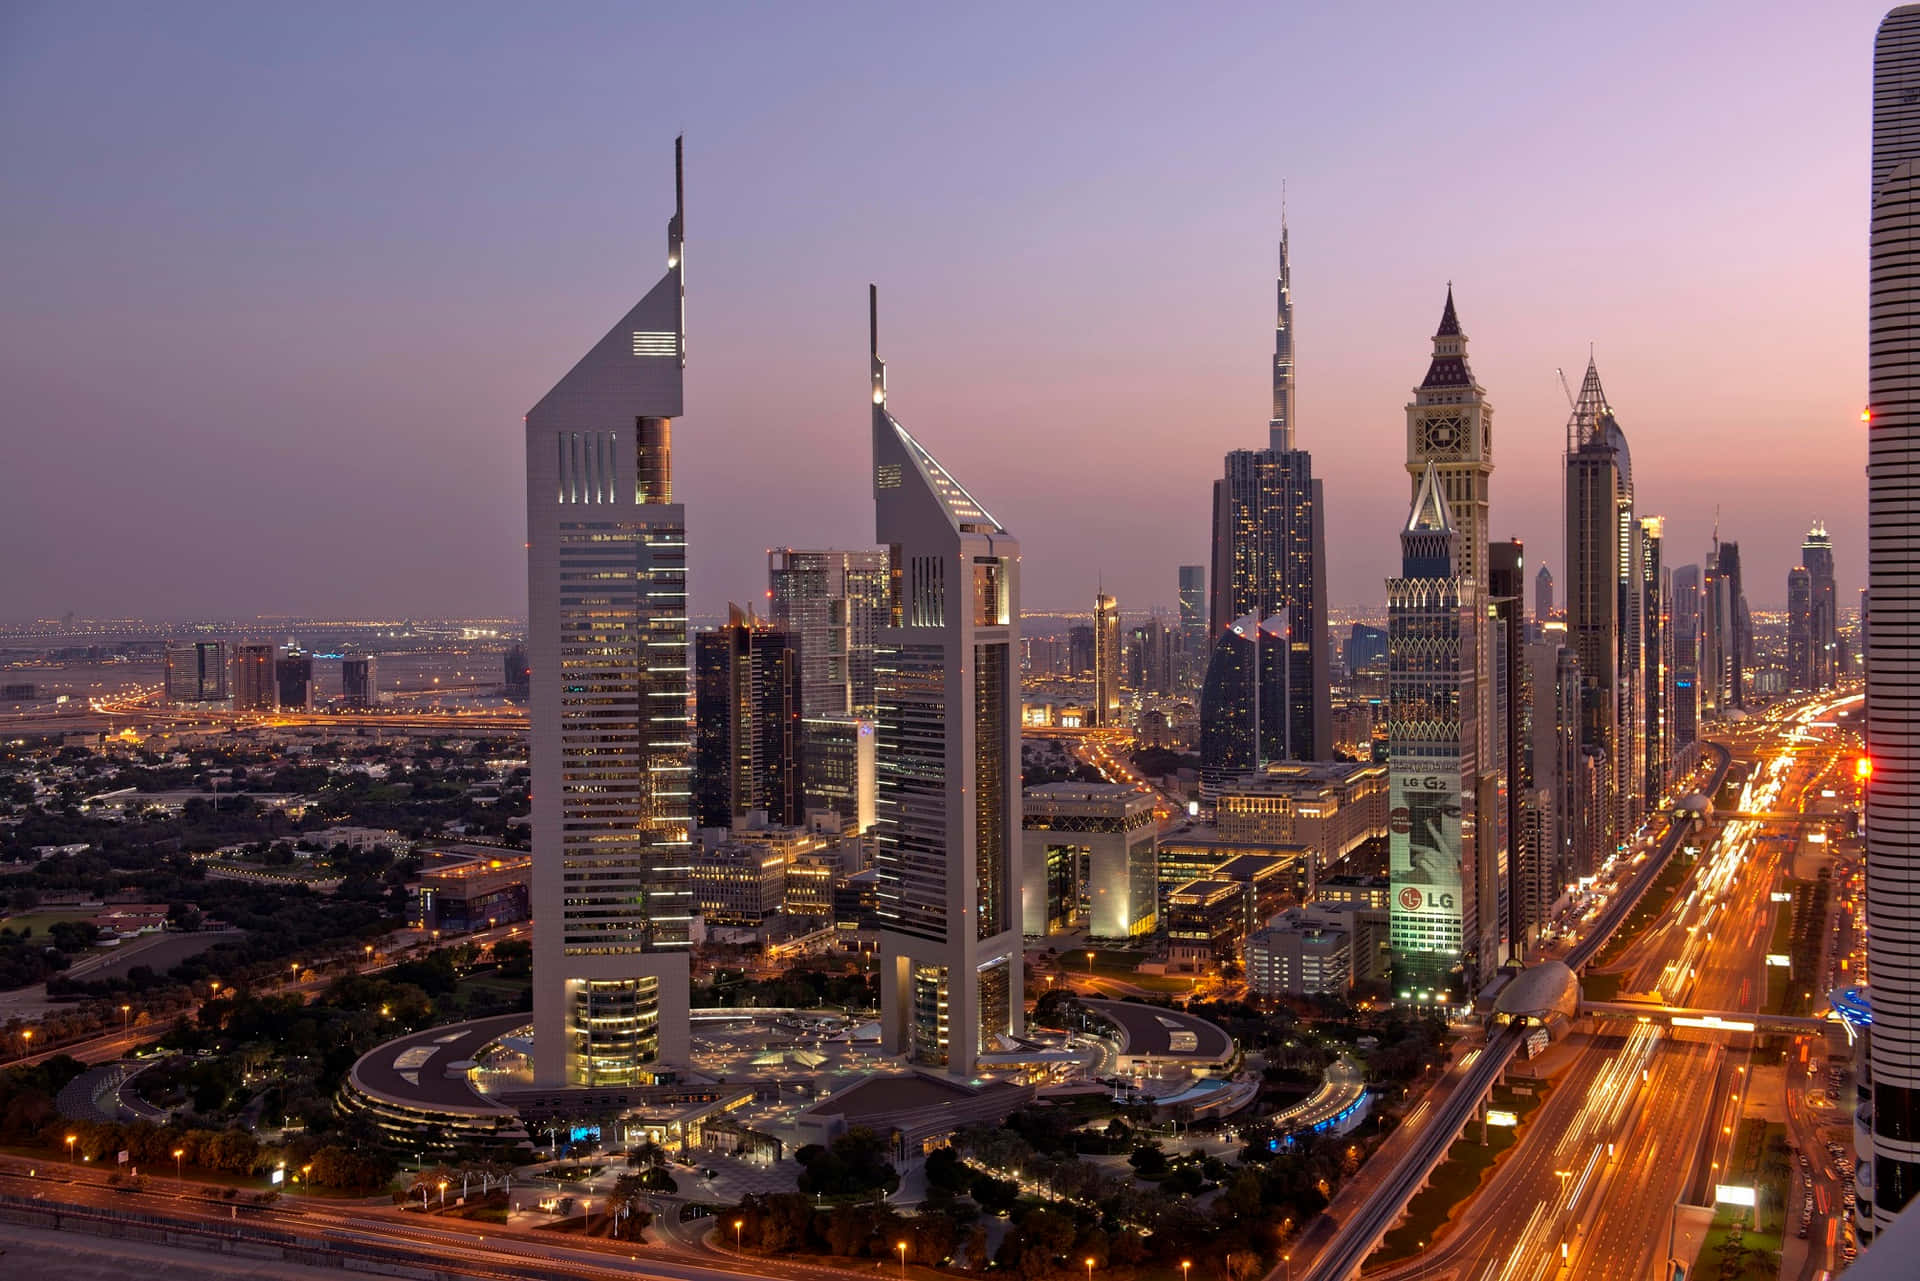 A view of the modern skyline of Dubai, United Arab Emirates